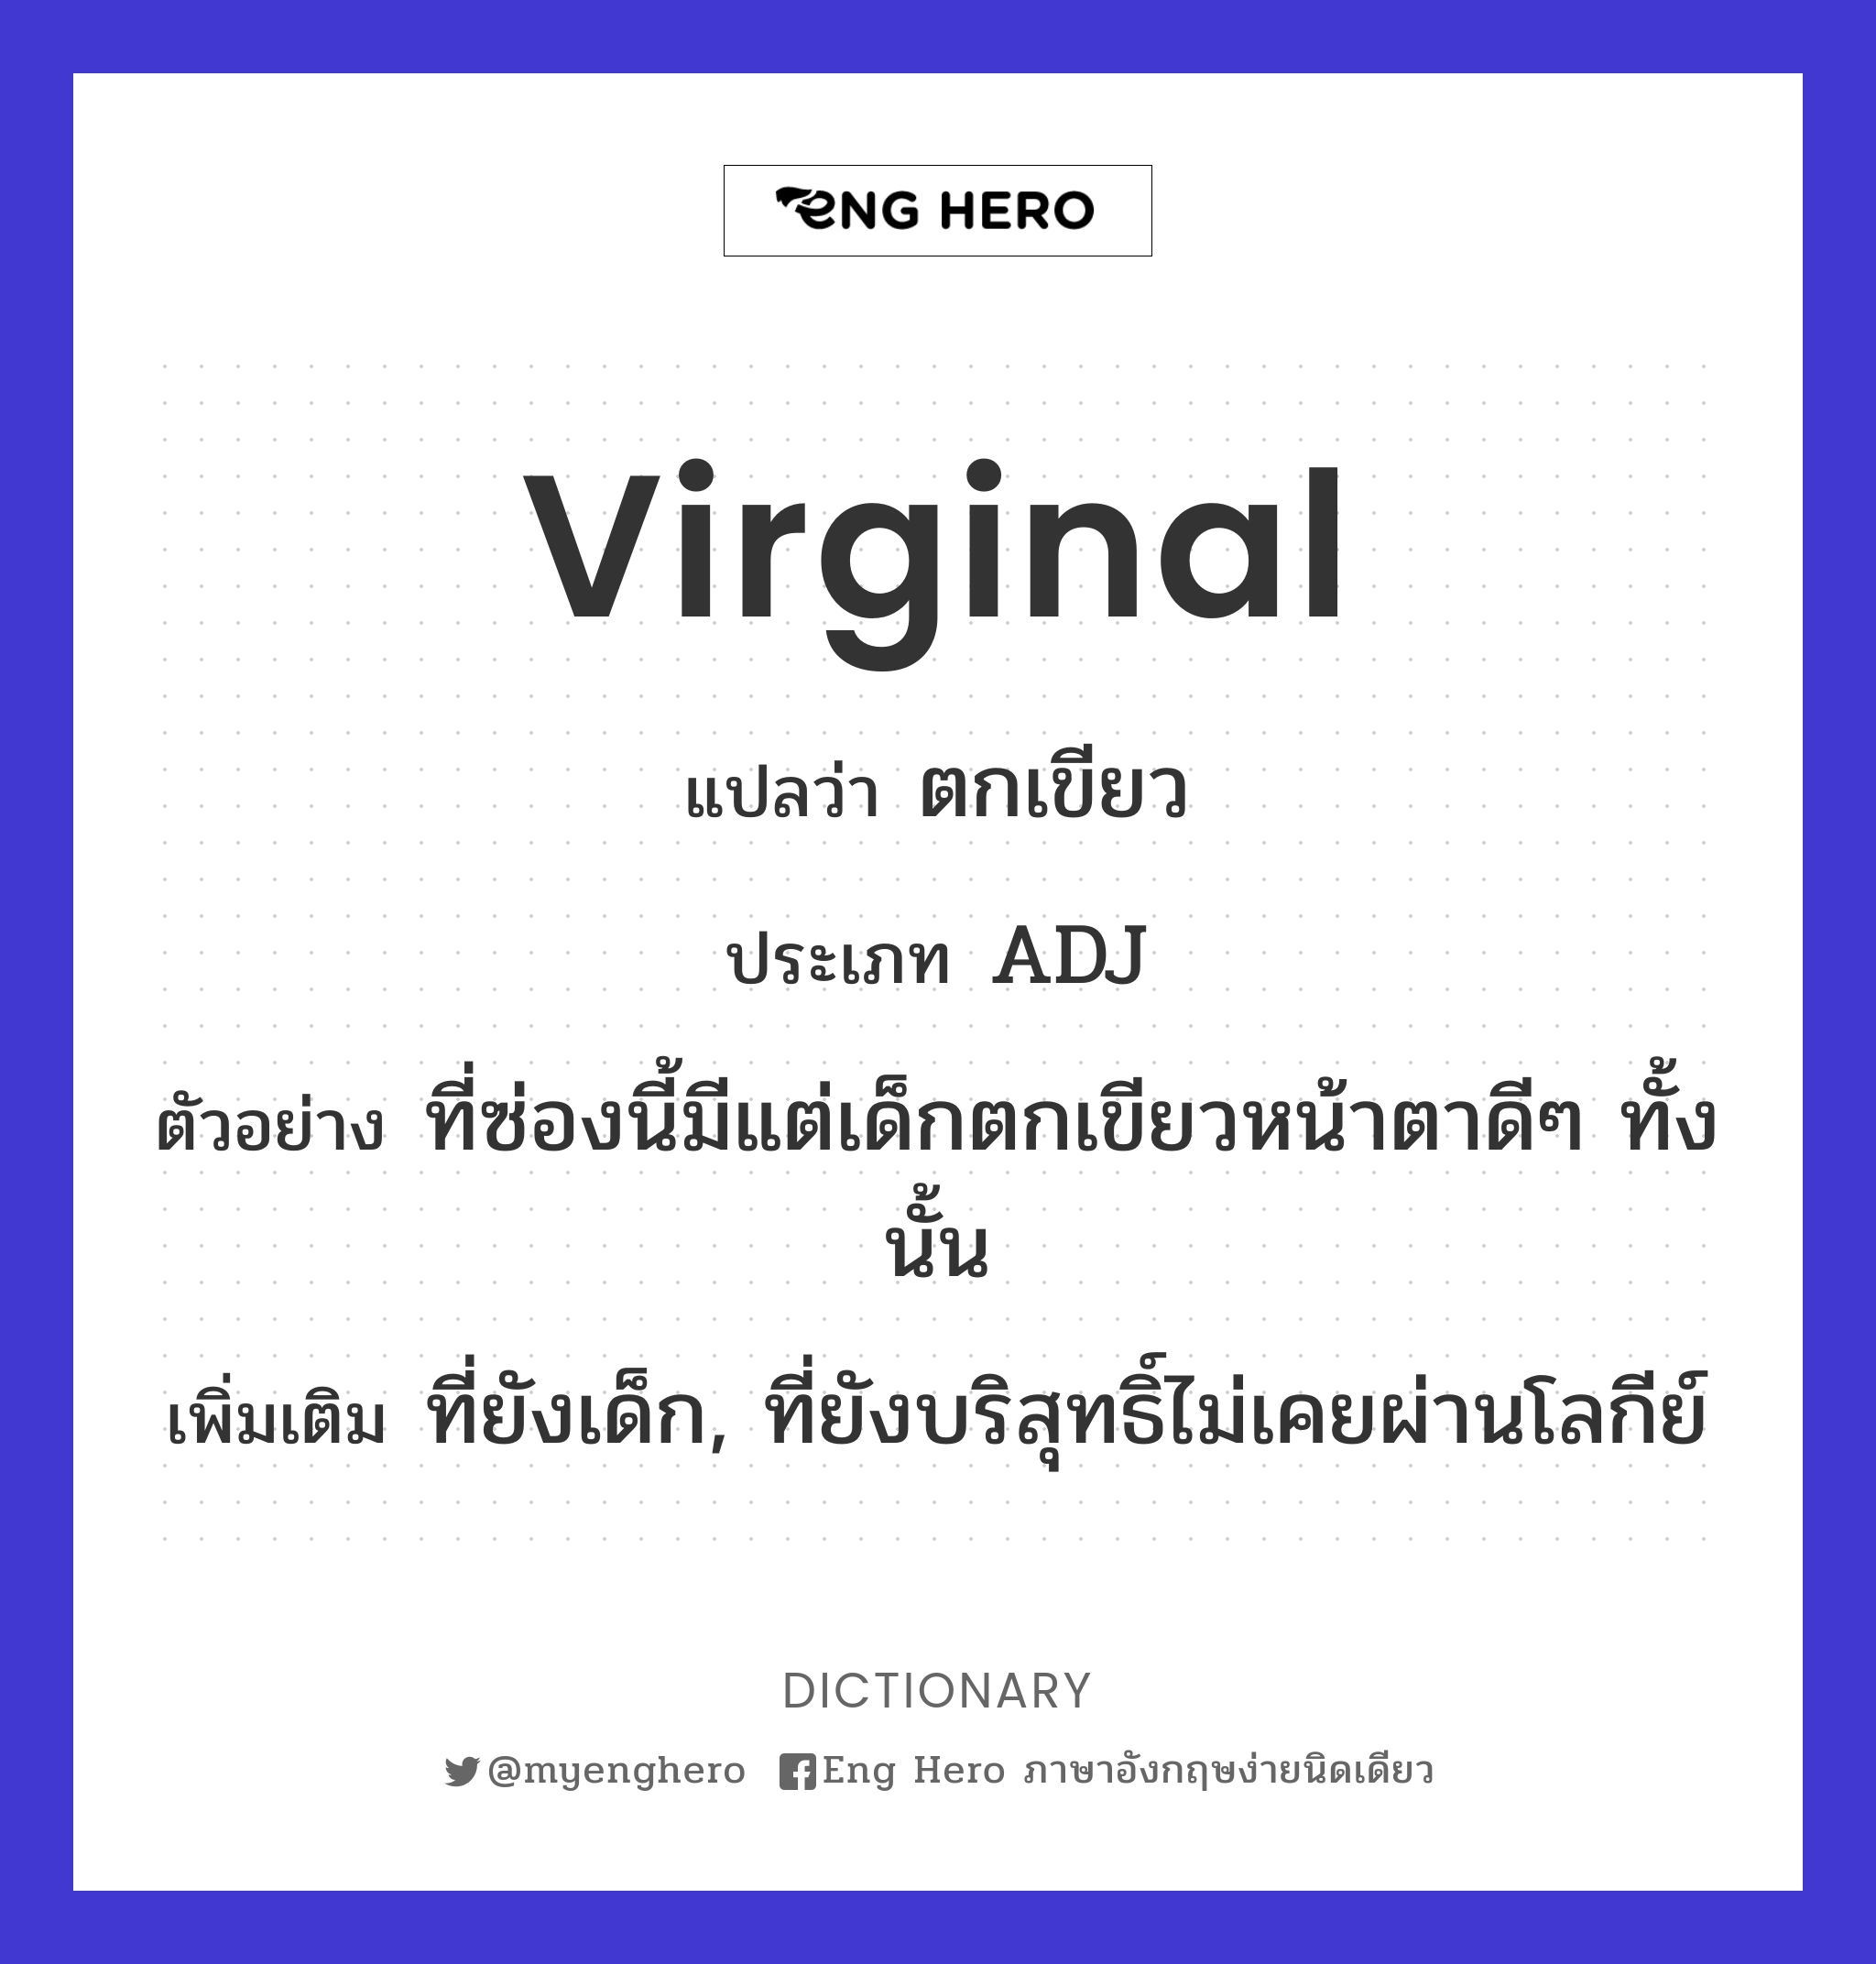 virginal